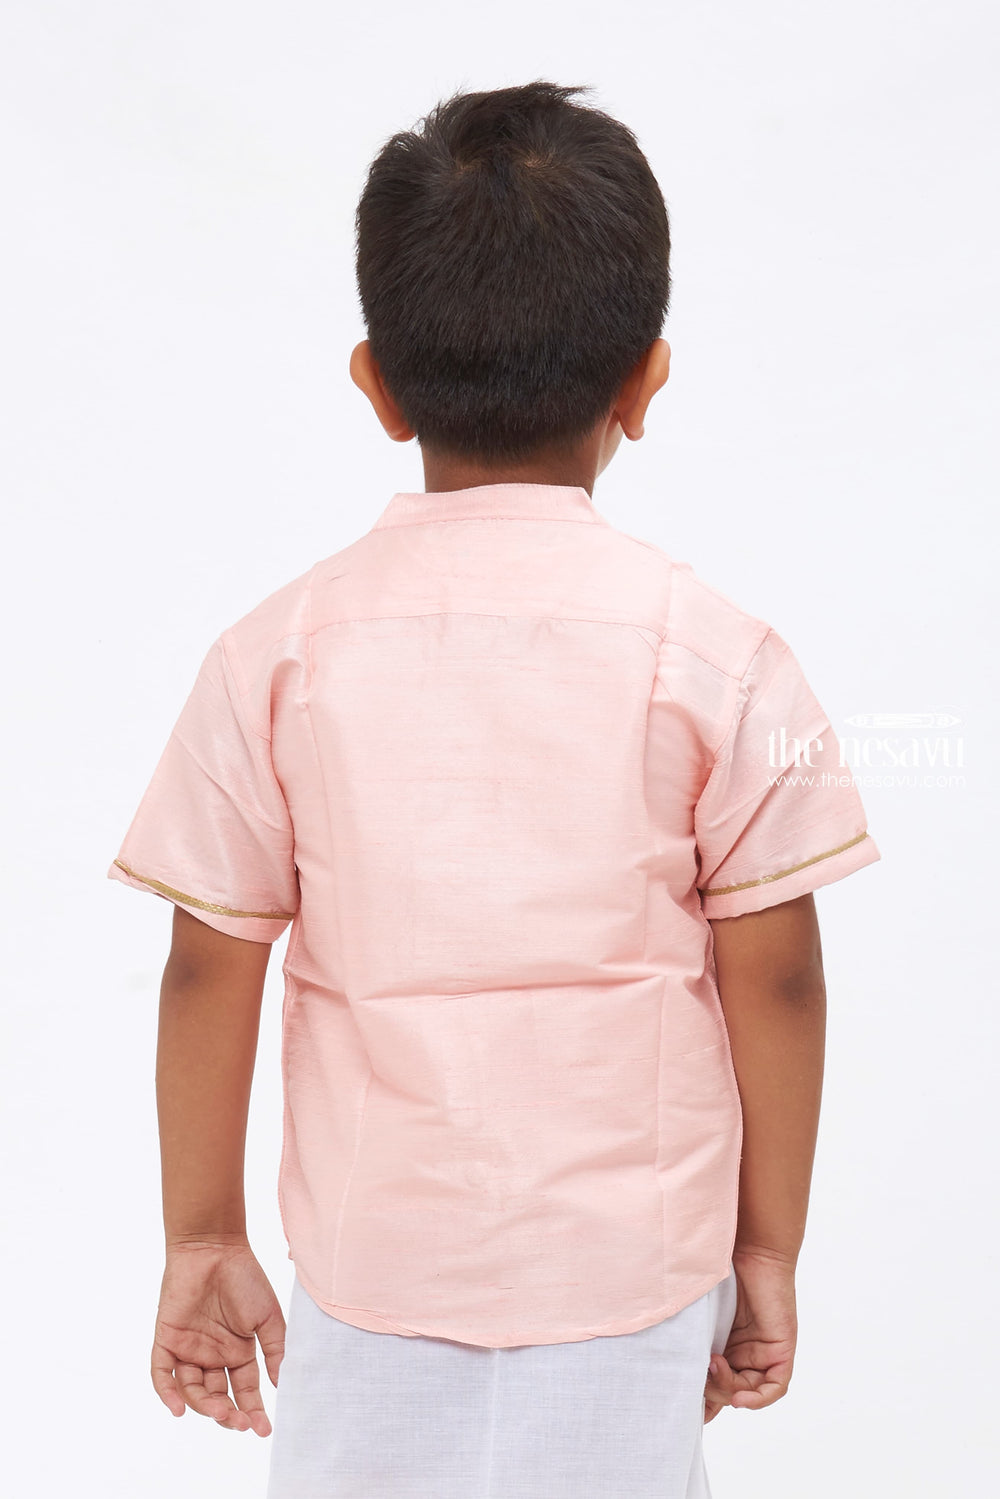 The Nesavu Boys Silk Shirt Boys Pink Silk Shirt with Ornate Embellishment Nesavu Nesavu Boys Pink Silk Shirt | Ornate Embellishment | Traditional Celebration Wear | The Nesavu